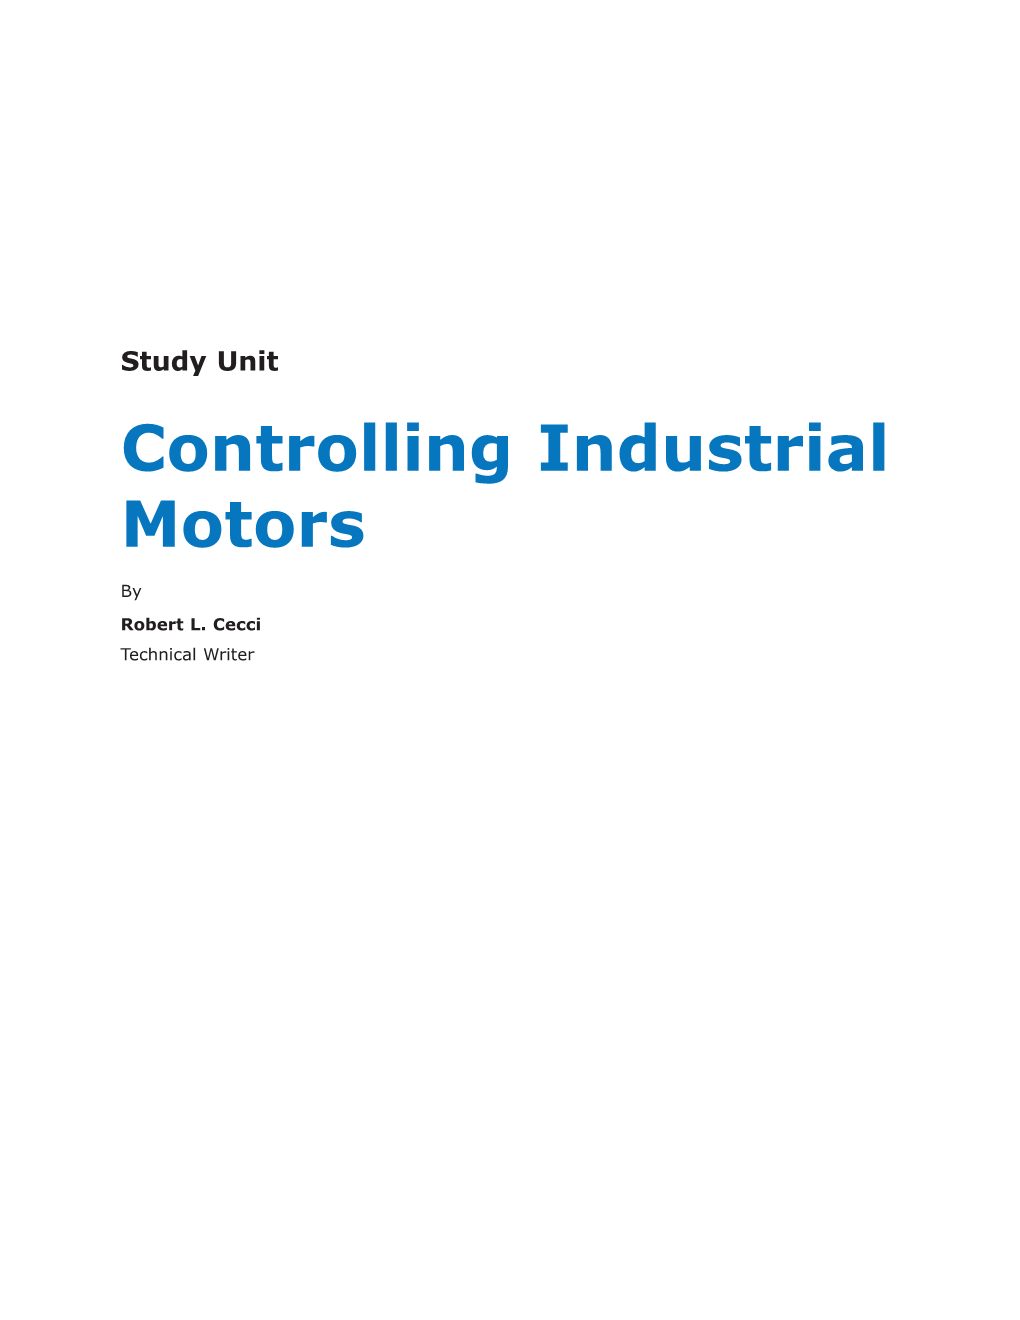 Study Unit Controlling Industrial Motors